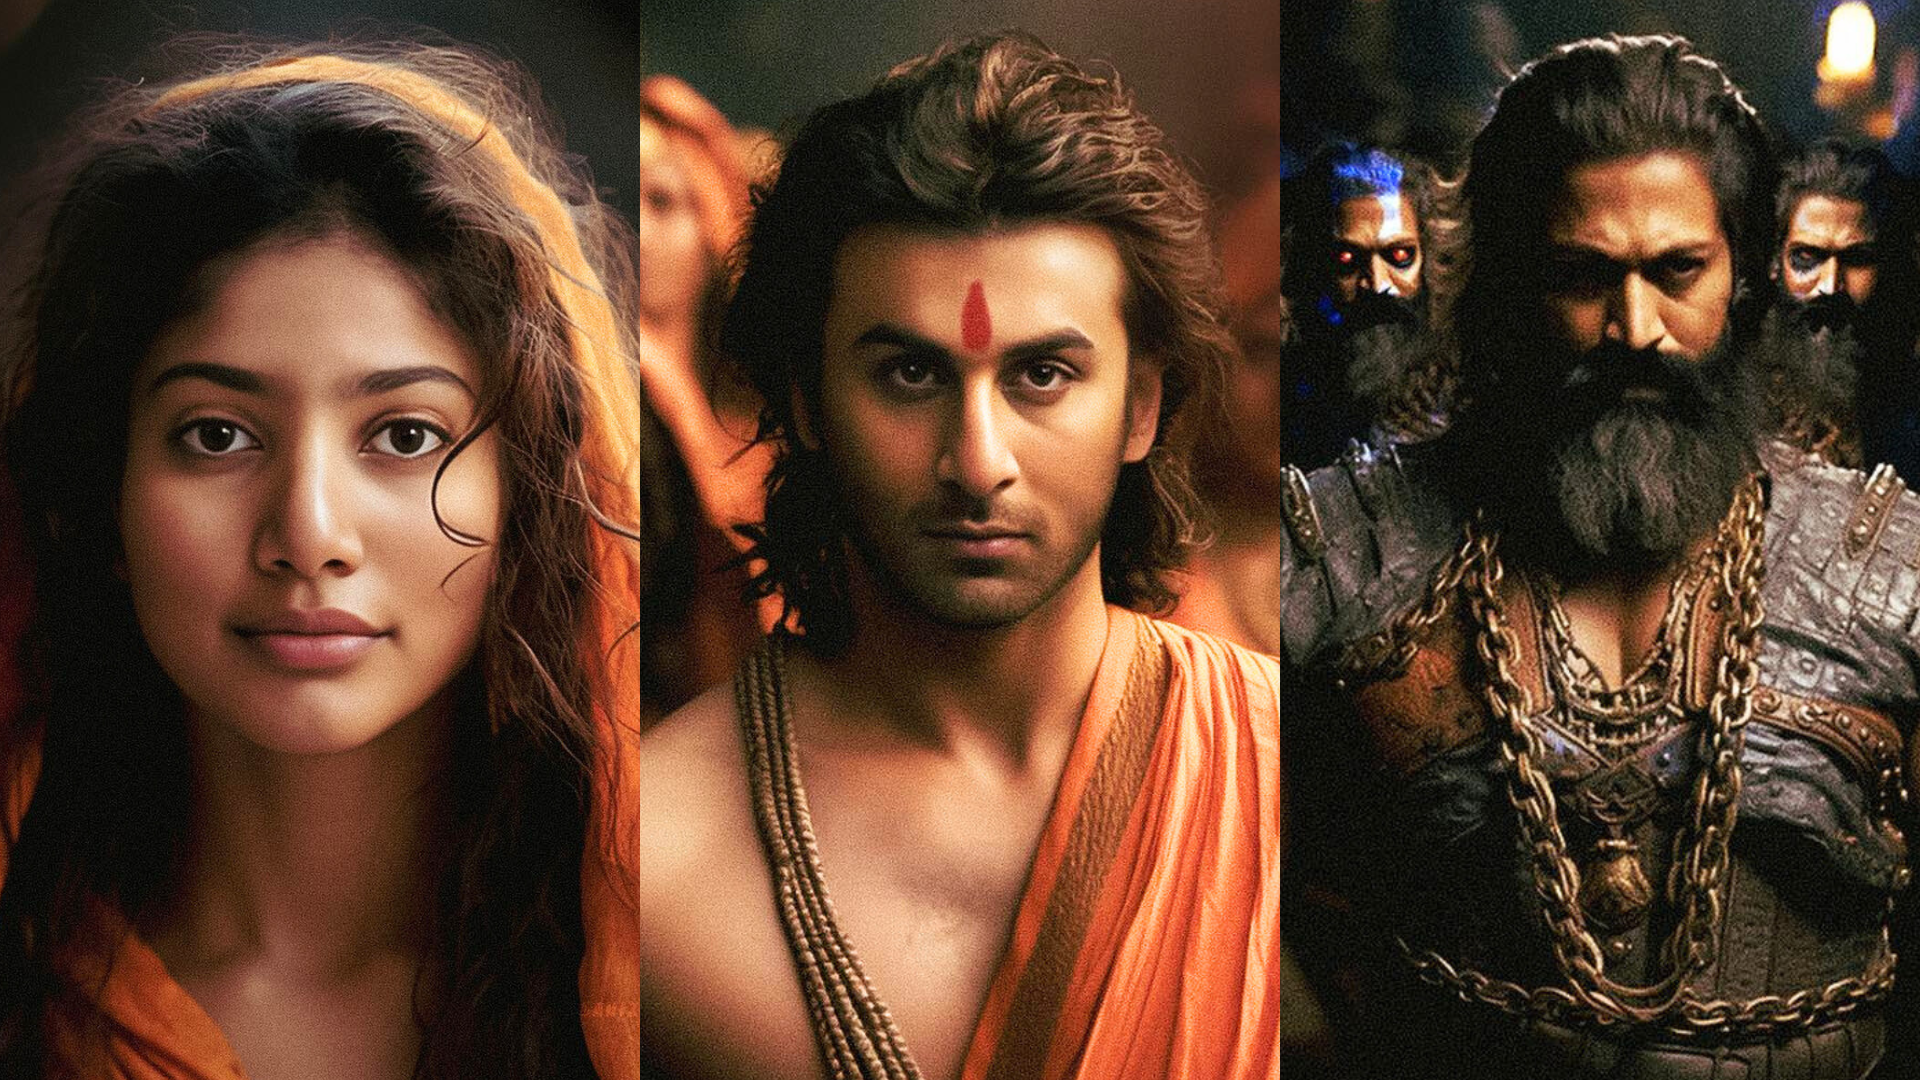 Ramayana Cast Salary Revealed: Ranbir Kapoor To Pocket Rs.250 Crore For The Trilogy, Sai Pallavi & Yash Fall Way Behind